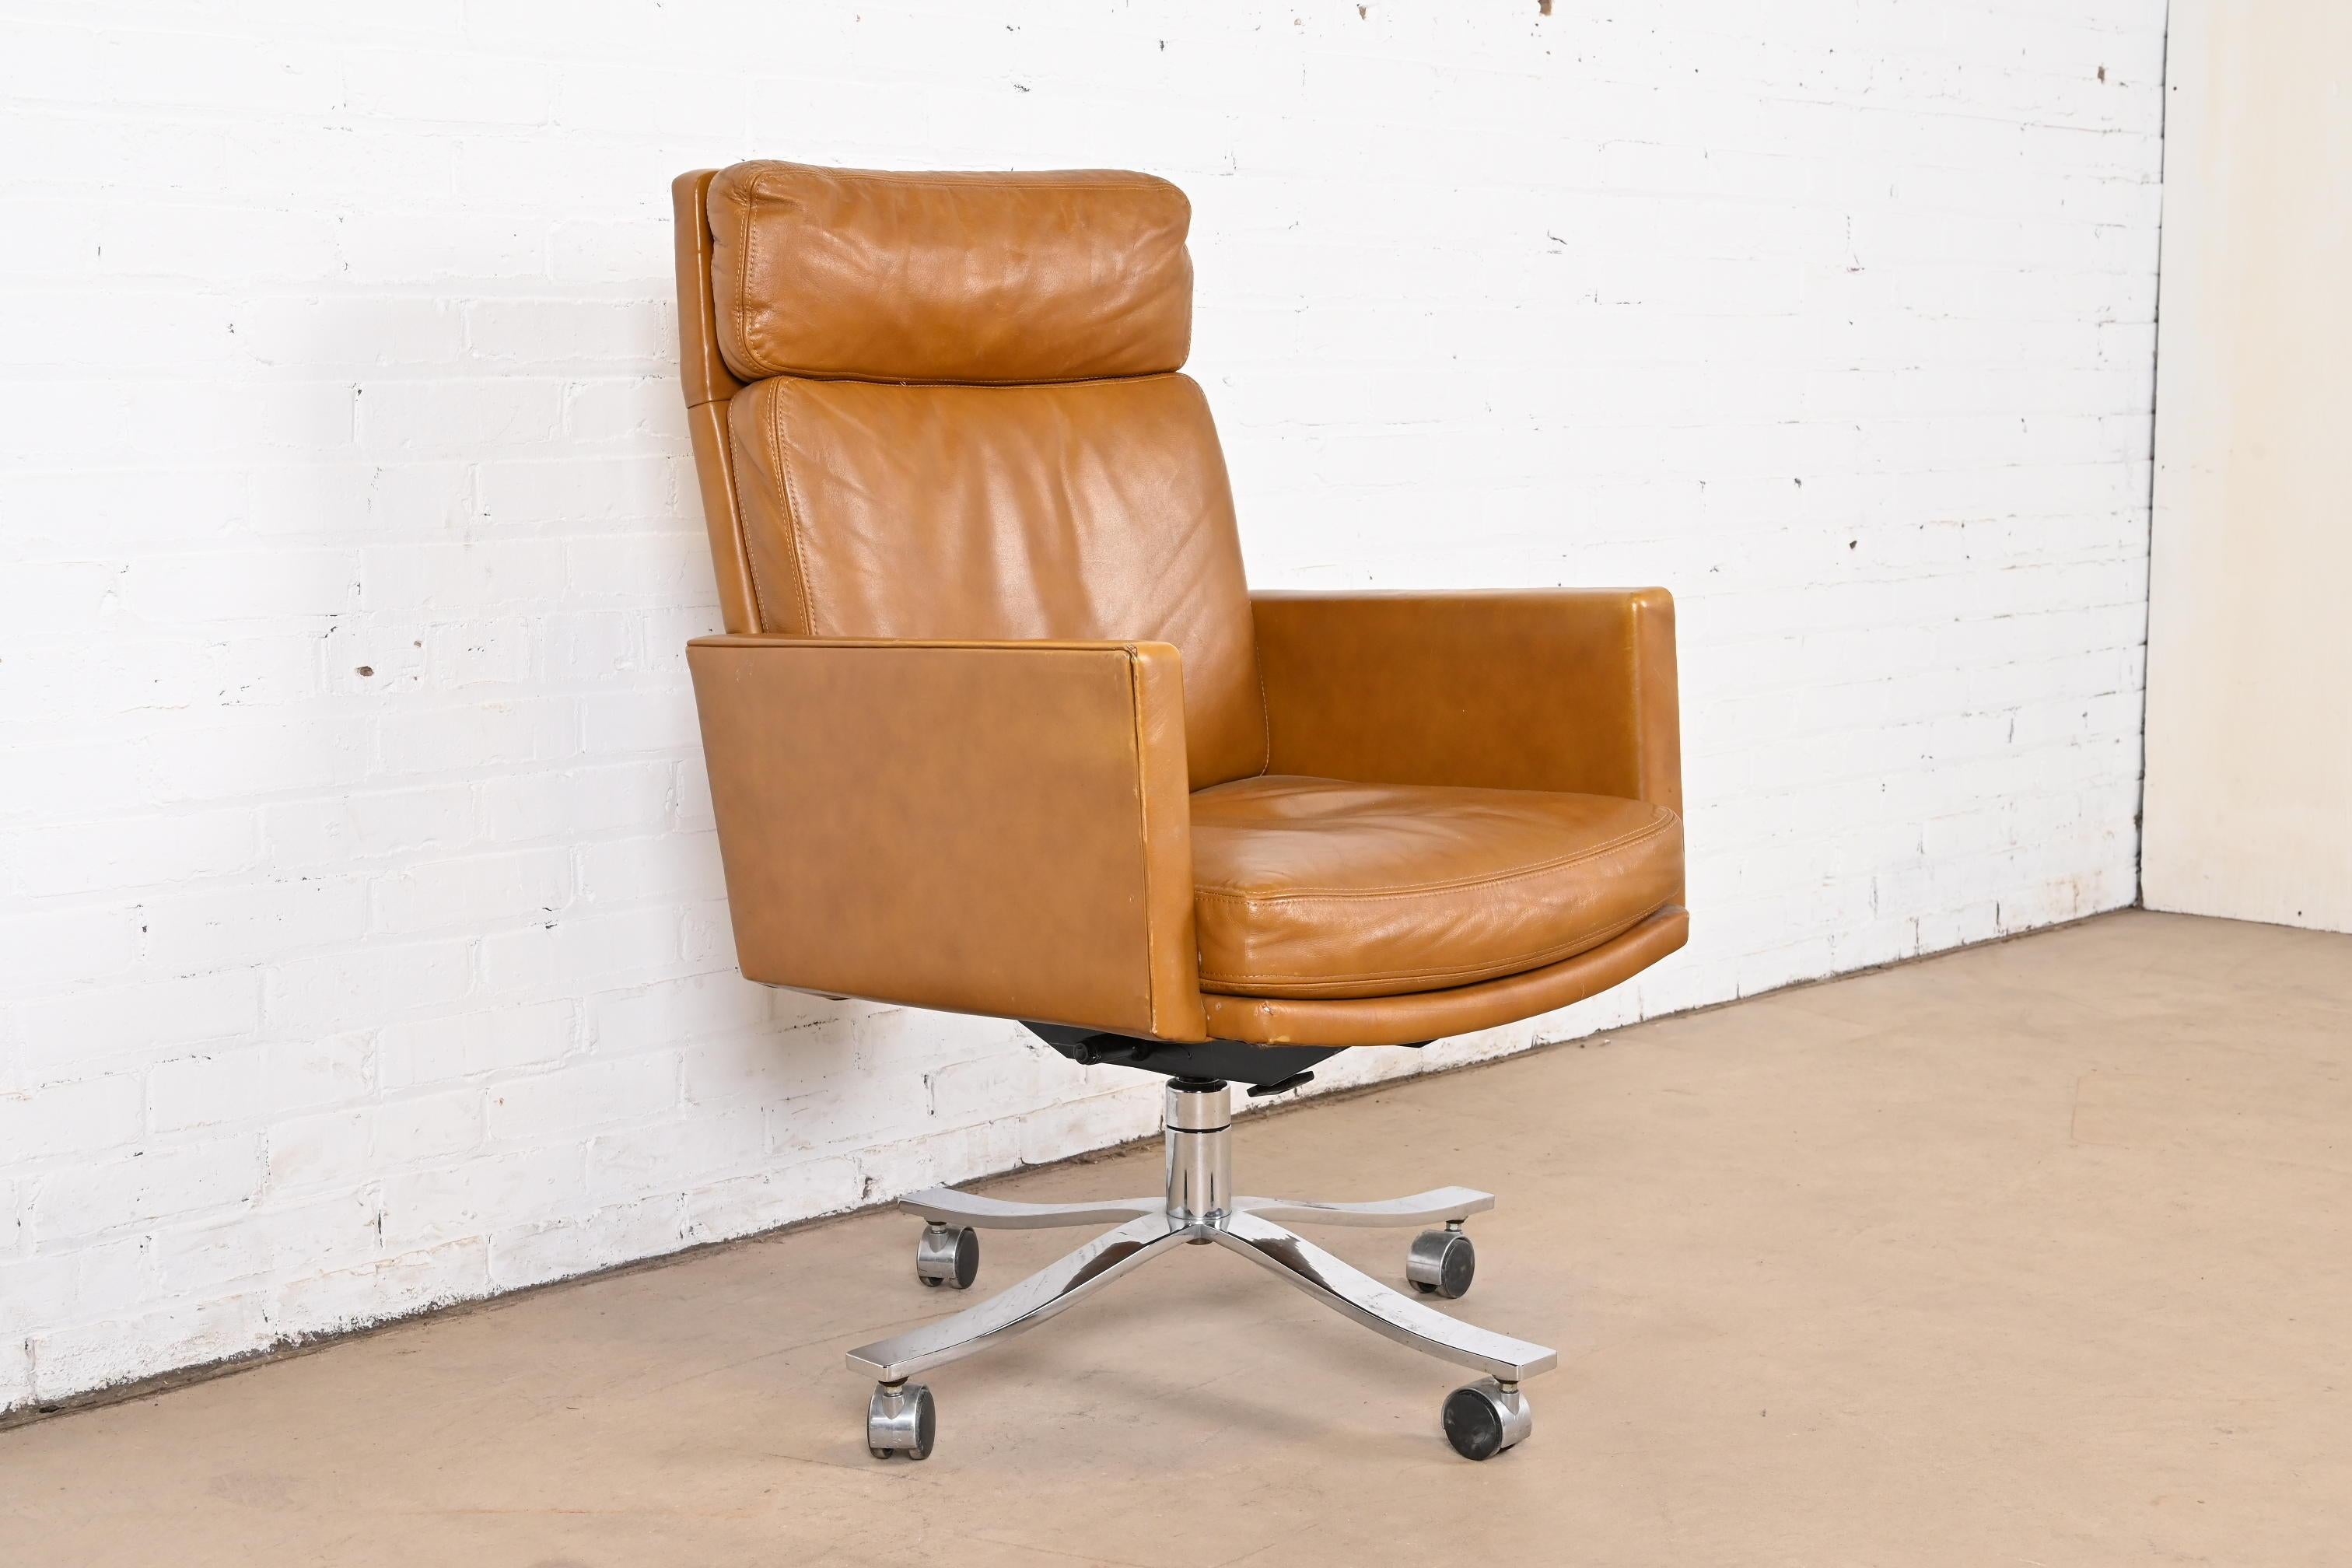 Stow Davis Mid-Century Modern Leather Executive Swivel Desk Chair, Circa 1960s For Sale 1